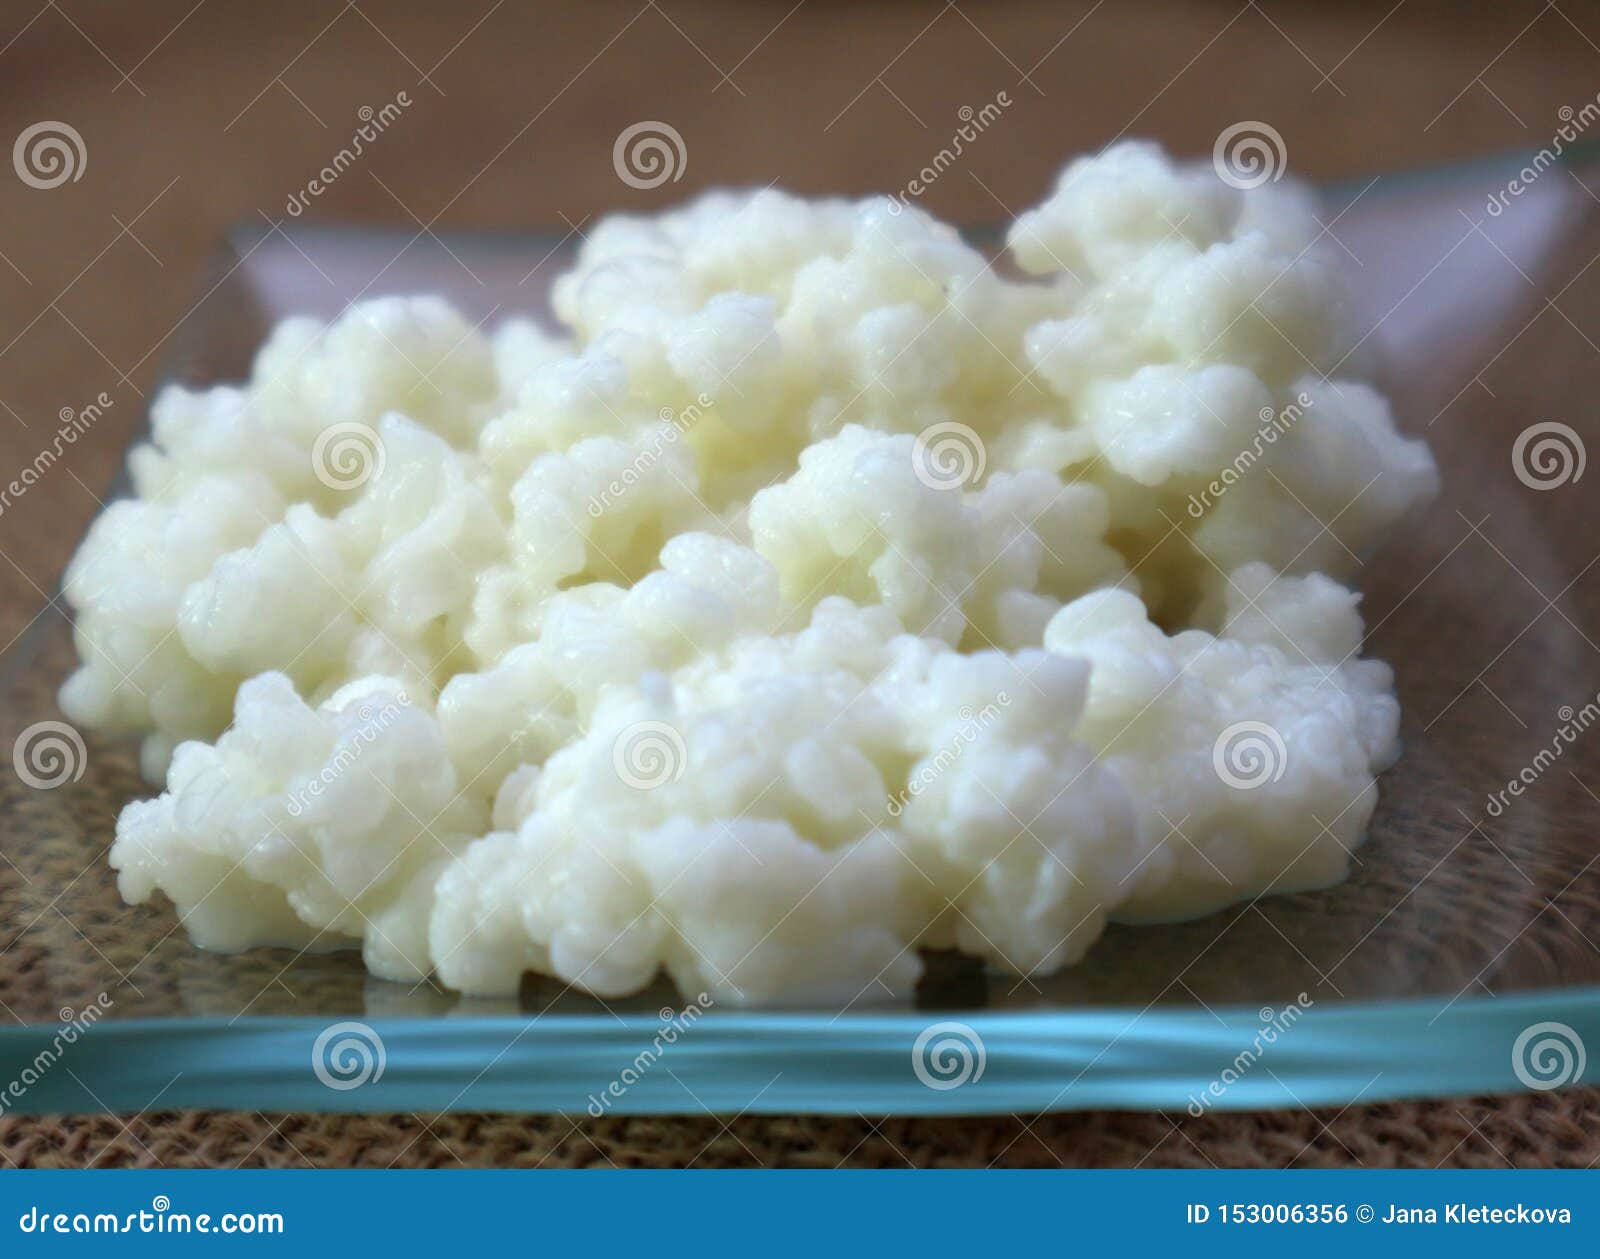 Granos probióticos de la leche de la esponja de la seta del tibetano del kéfir del primer. Foto probiótica de los granos de la leche de la esponja de la seta del tibetano del kéfir del primer